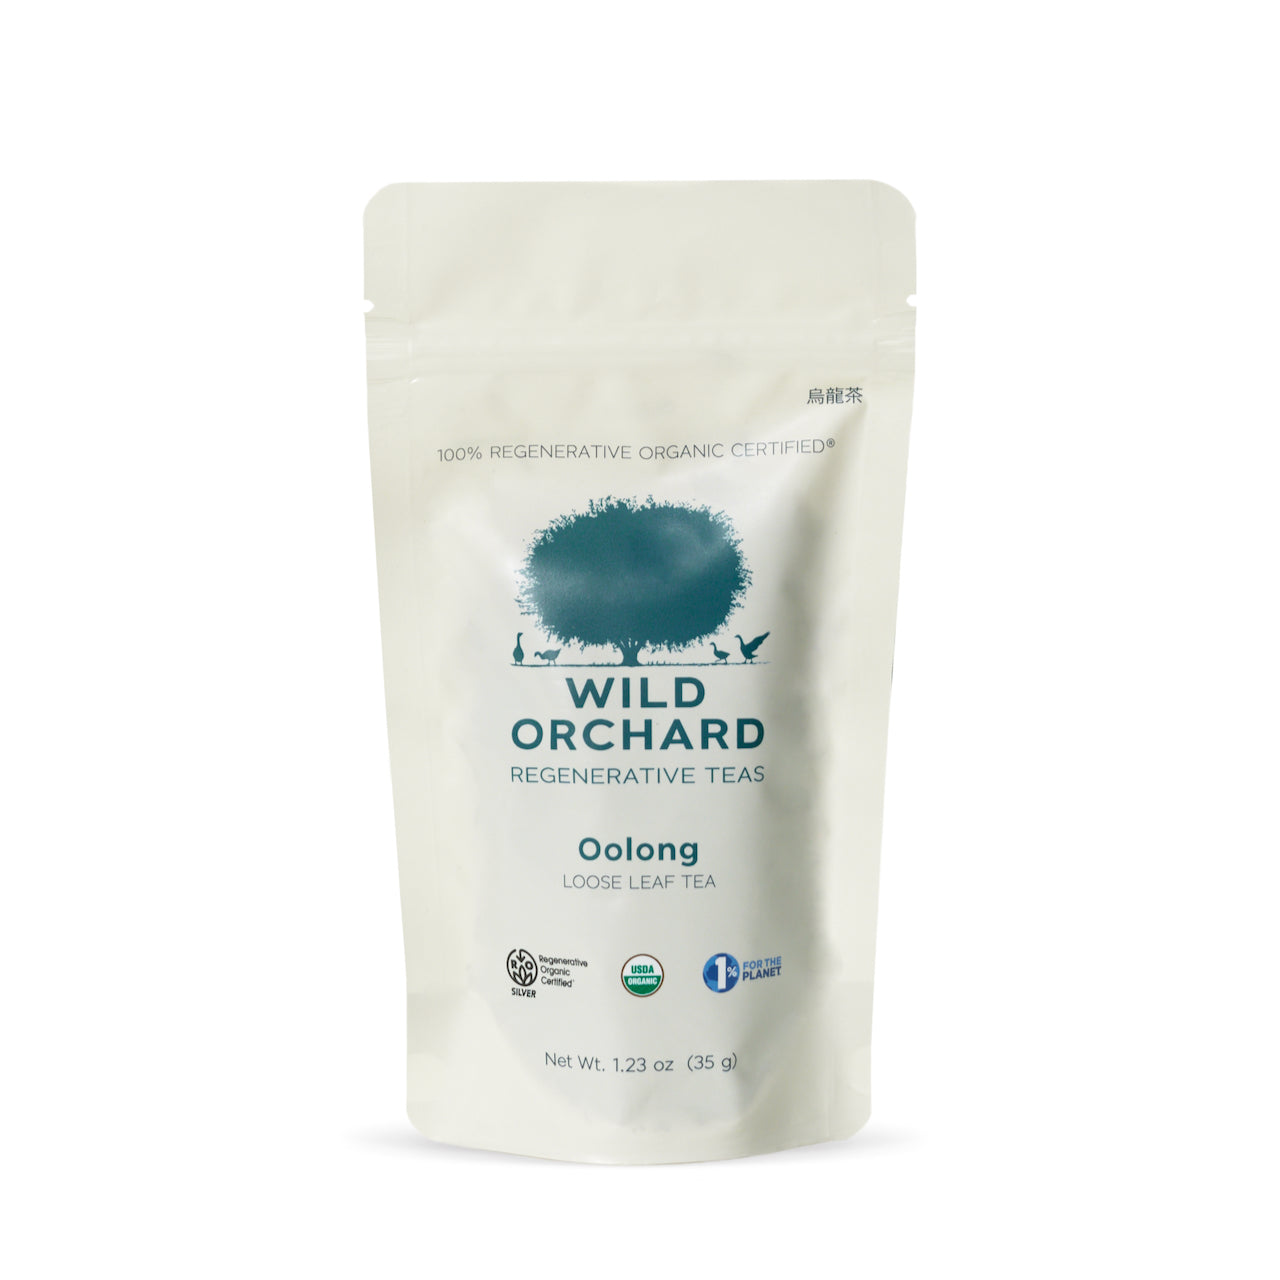 Wild Orchard Tea Oolong - Loose Leaf Bag - 6 Bags by Farm2Me